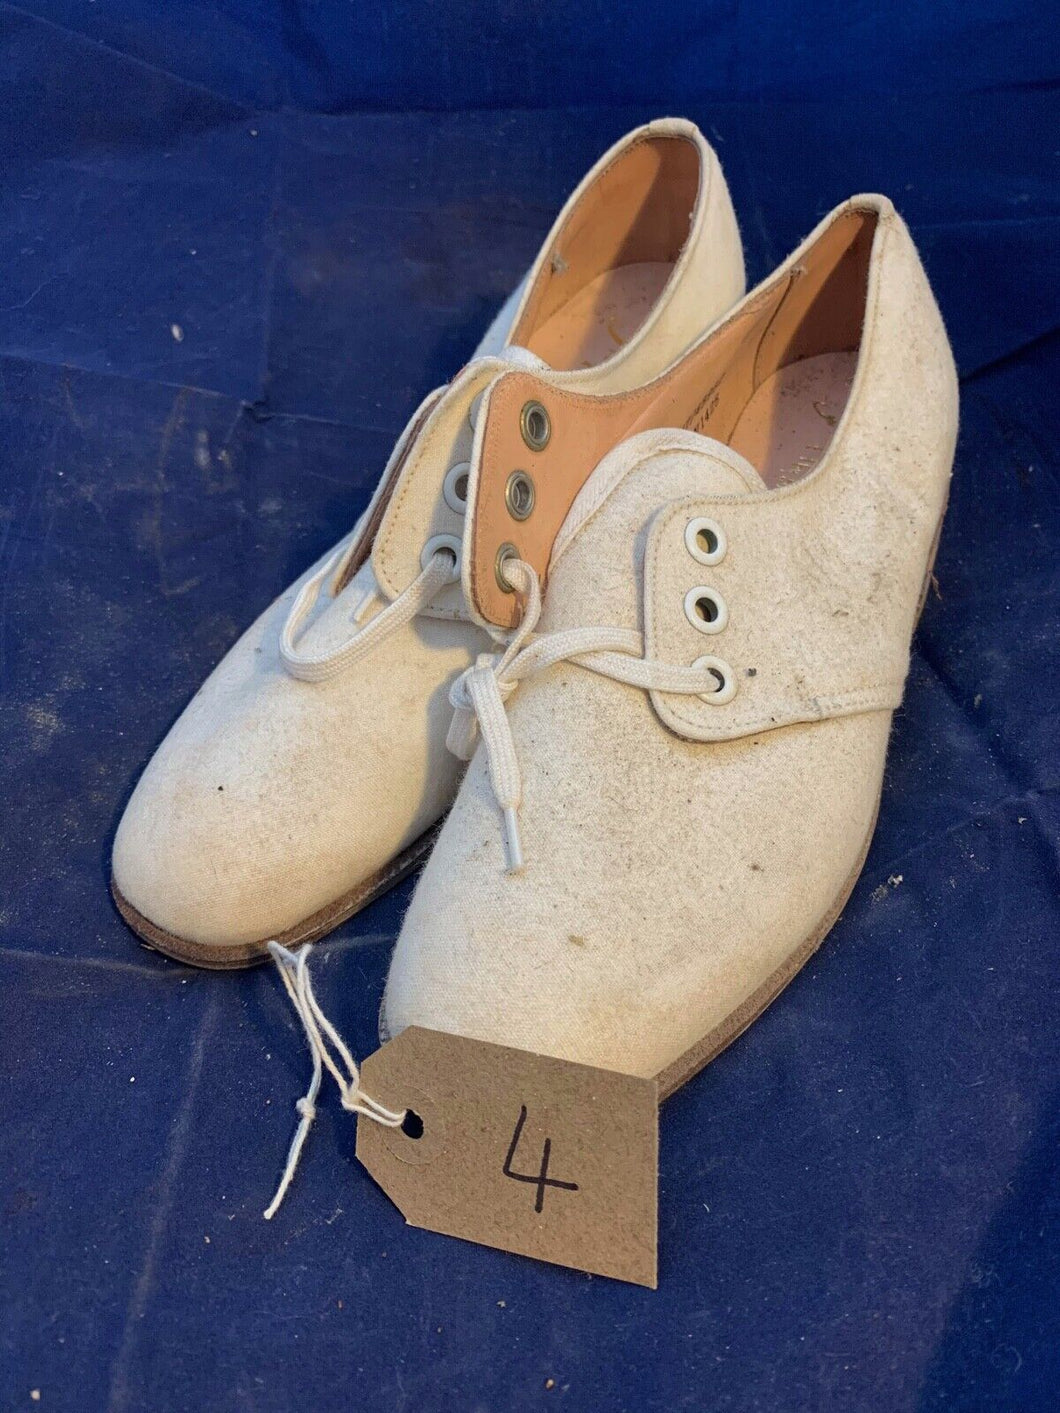 Original WW2 British Army Women's White Summer Shoes - ATS WAAF - Size 220s #4